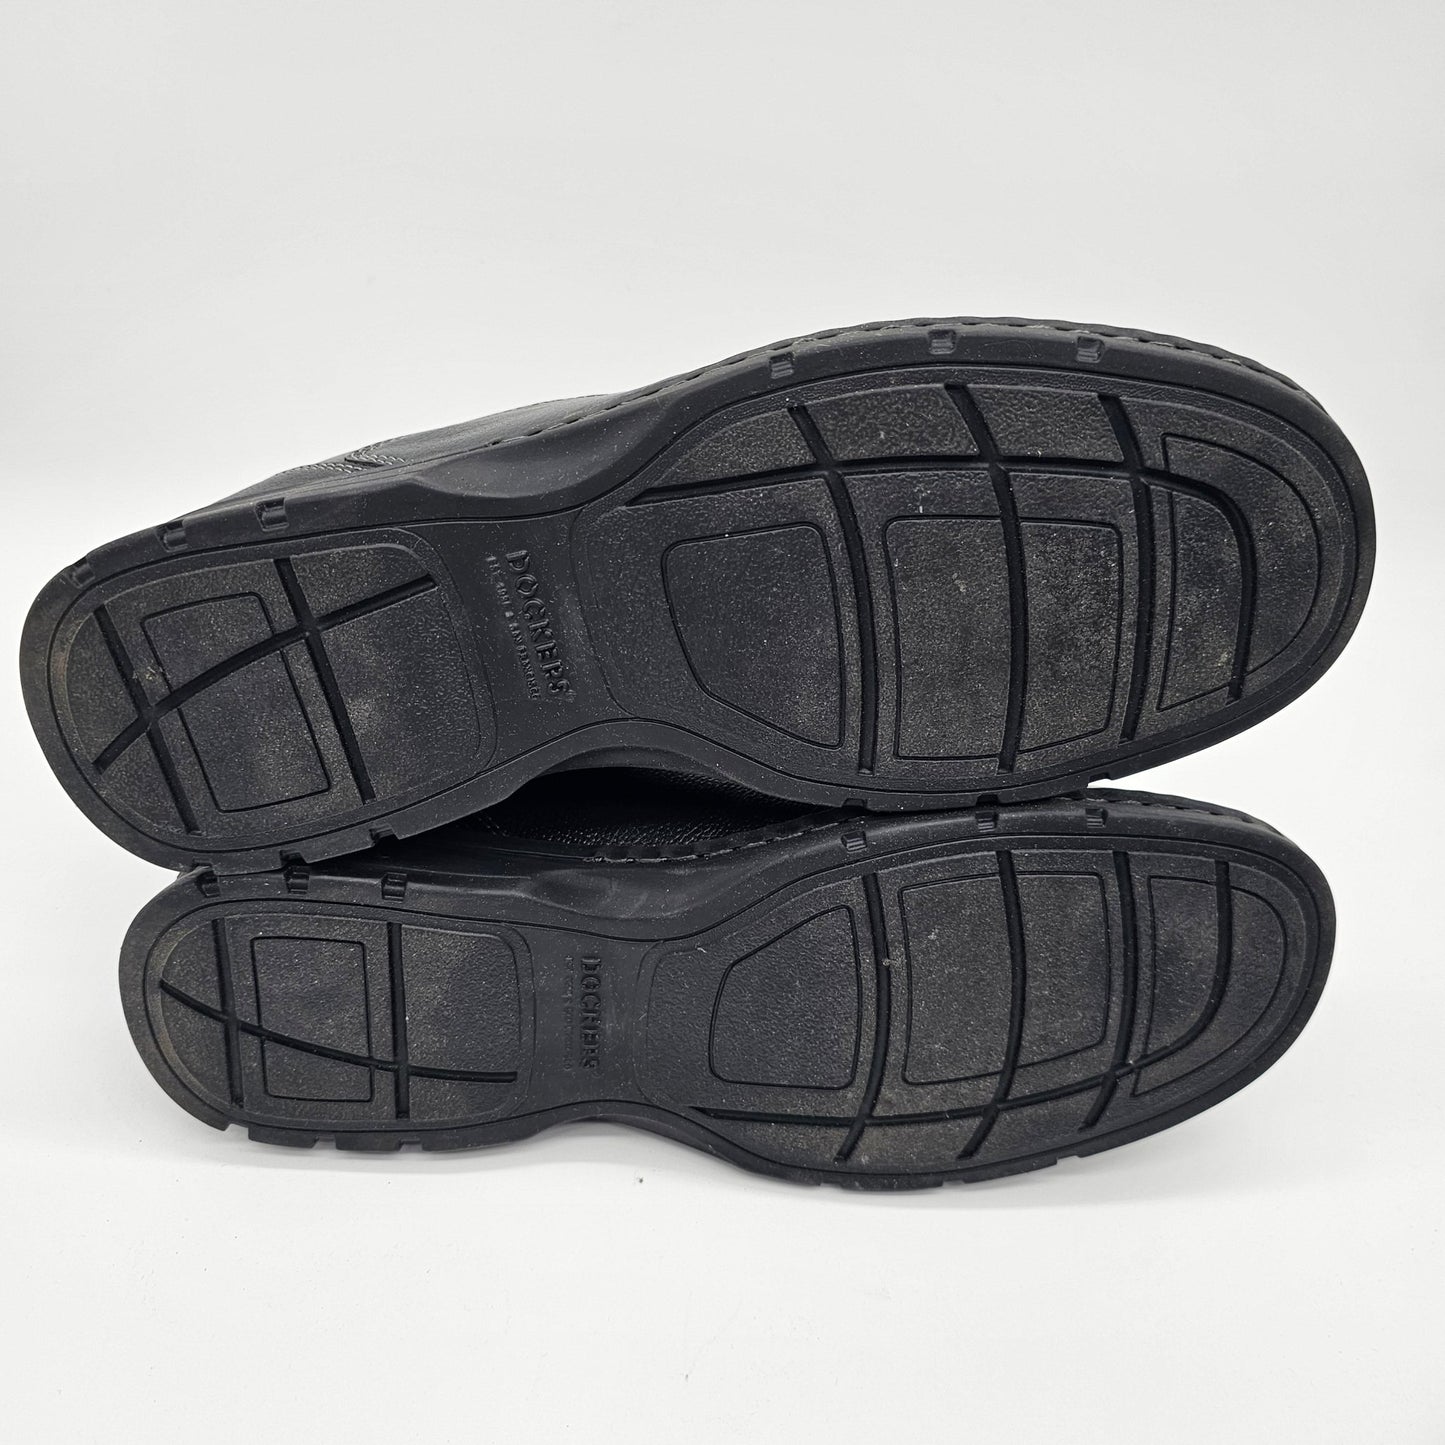 Dockers Men’s Trustee Leather Oxford Dress Shoe, Black, 11.5 M US - DQ Distribution